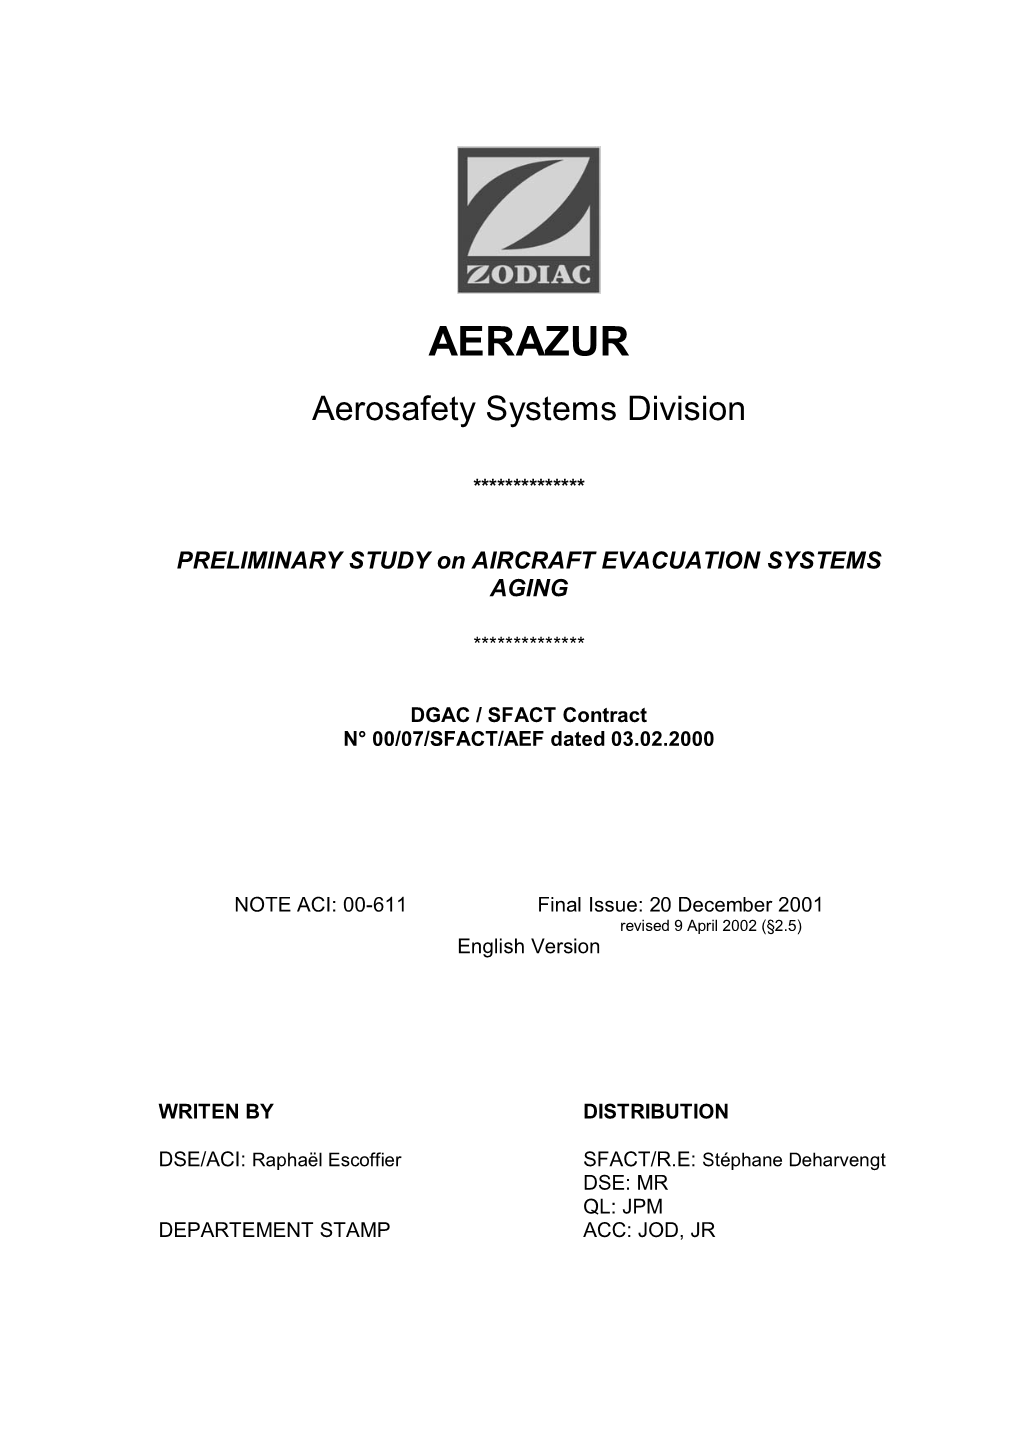 AERAZUR Aerosafety Systems Division